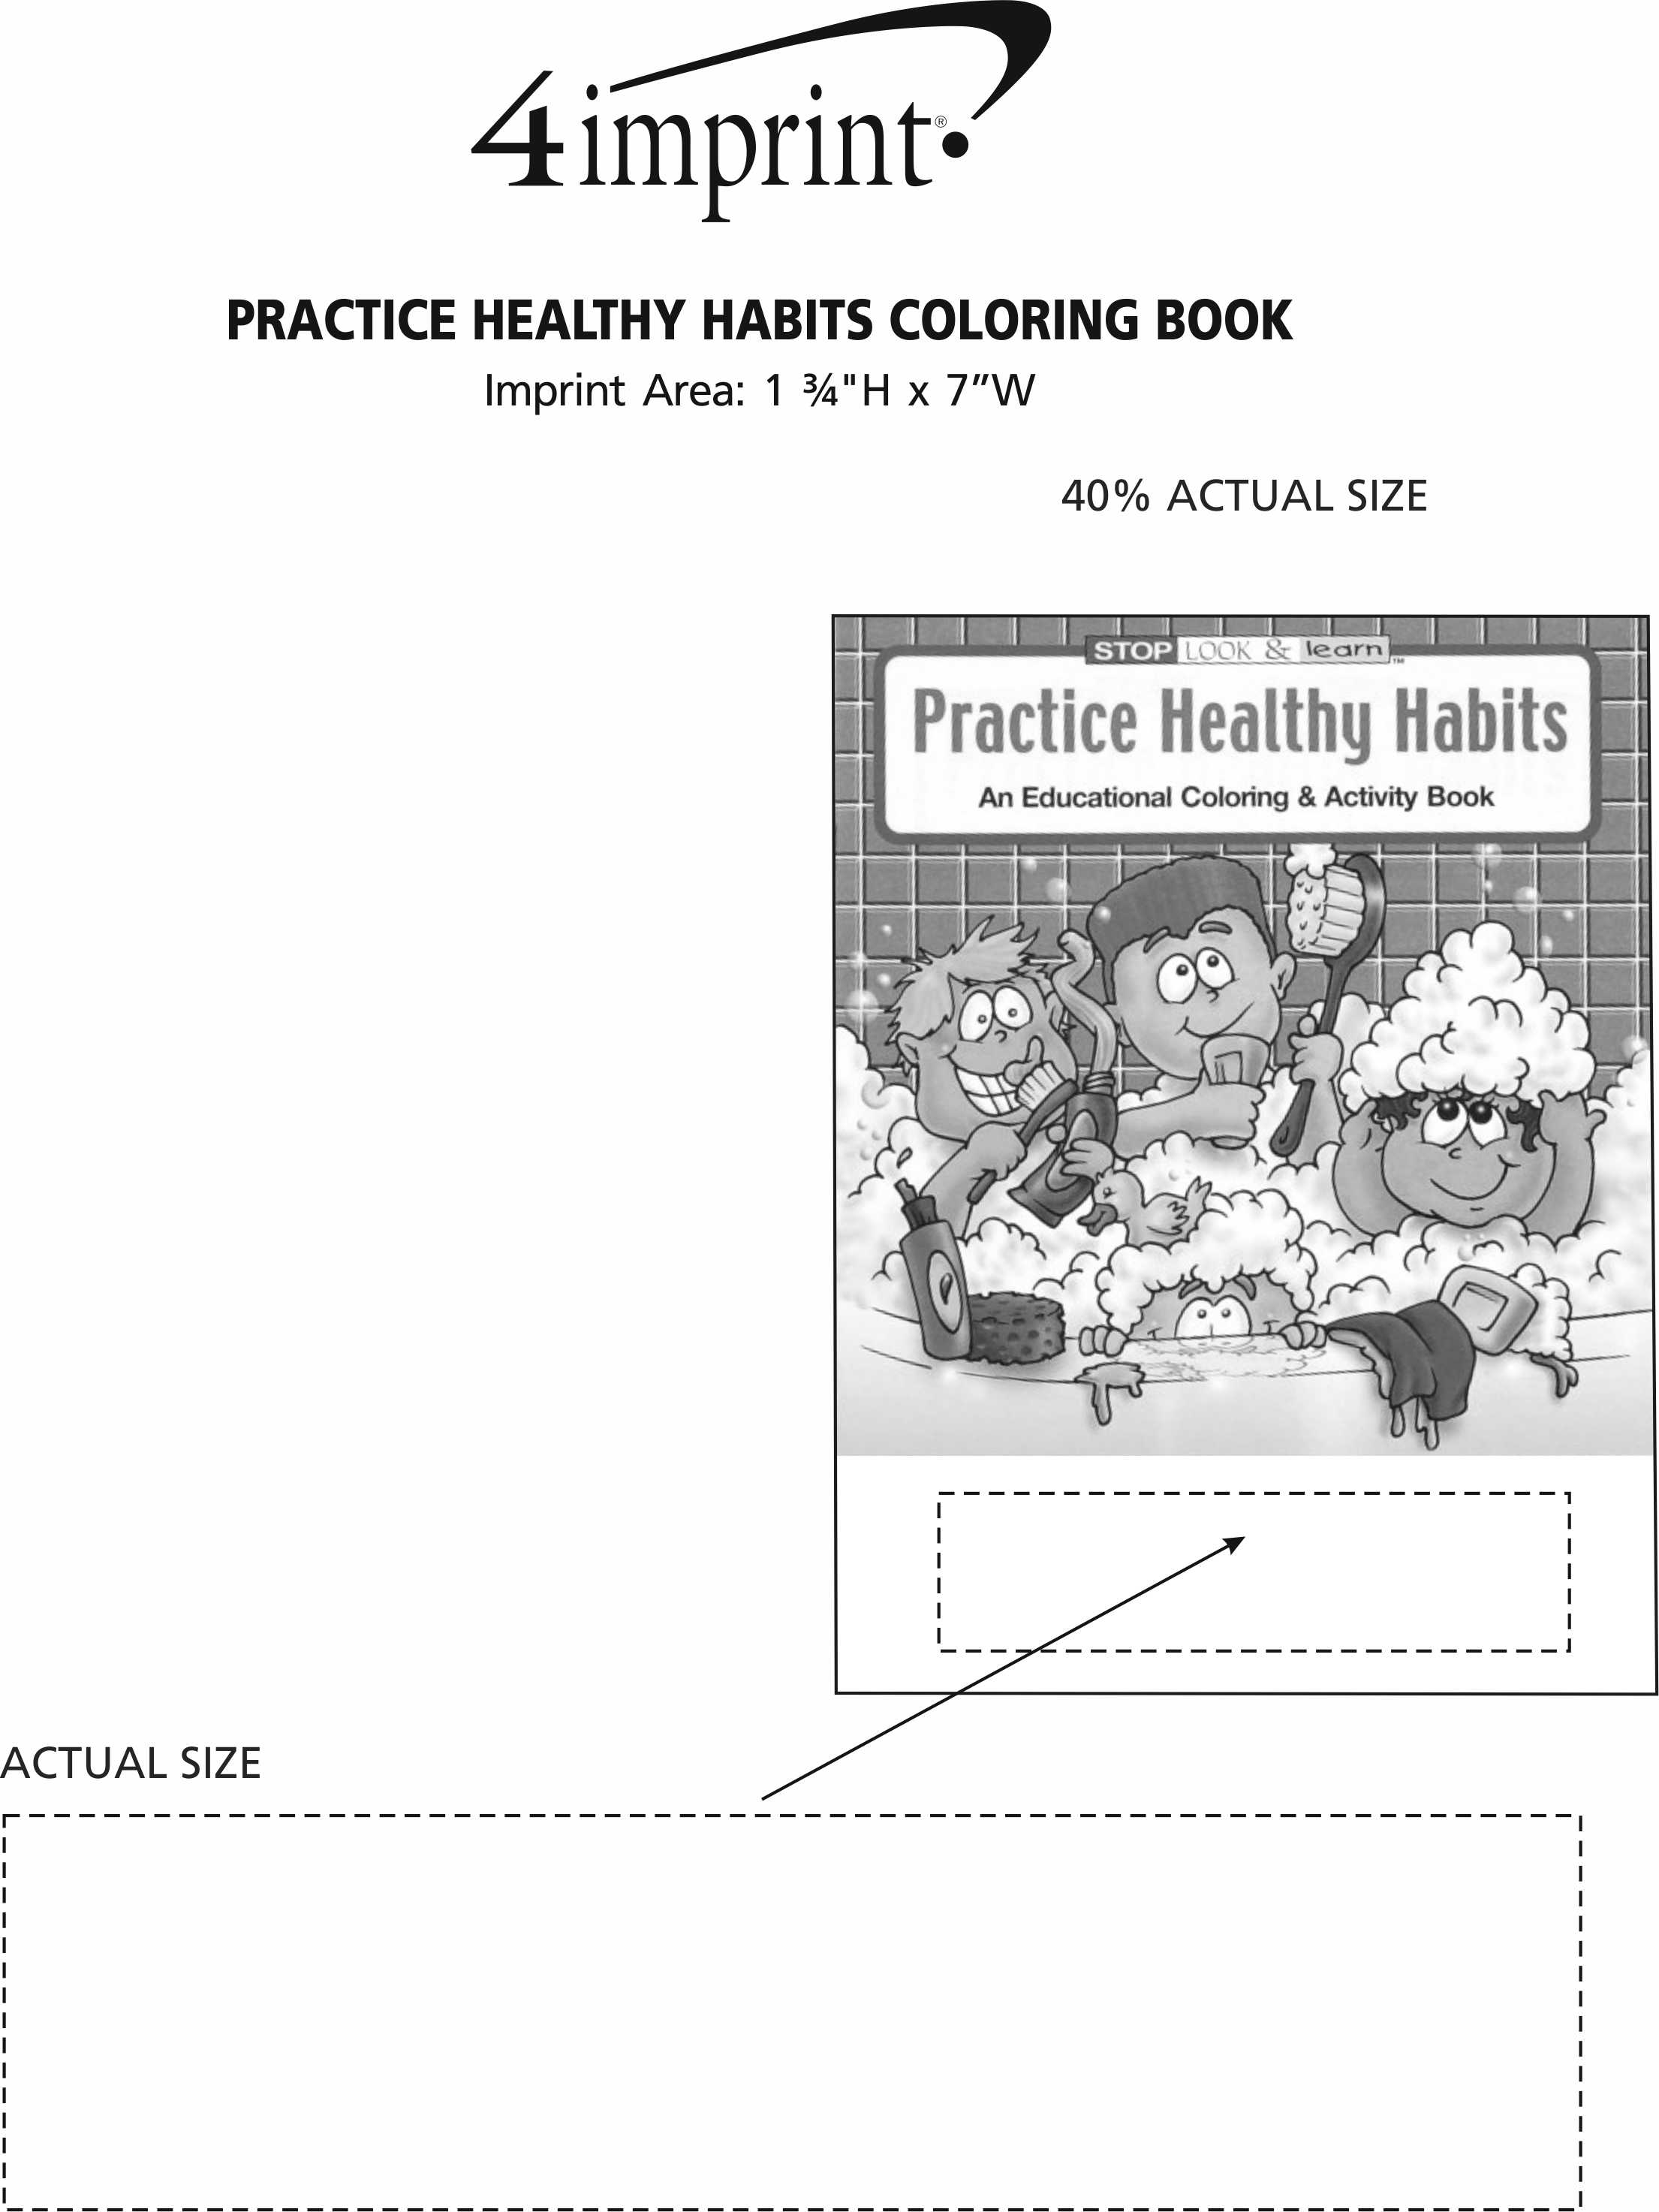 Imprint Area of Practice Healthy Habits Coloring Book